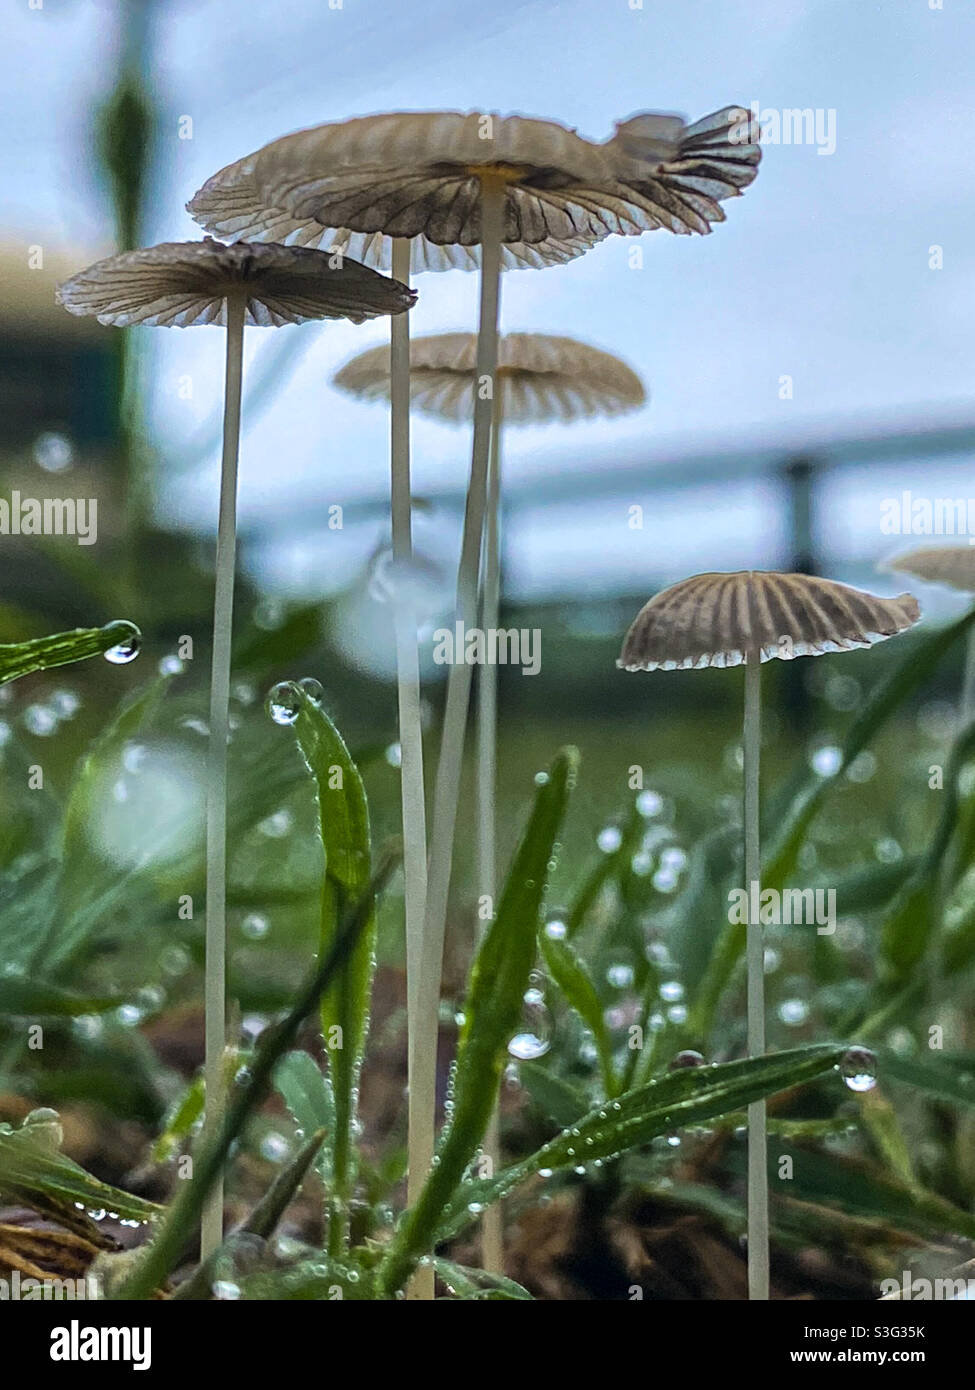 Minuscoli funghi Foto Stock